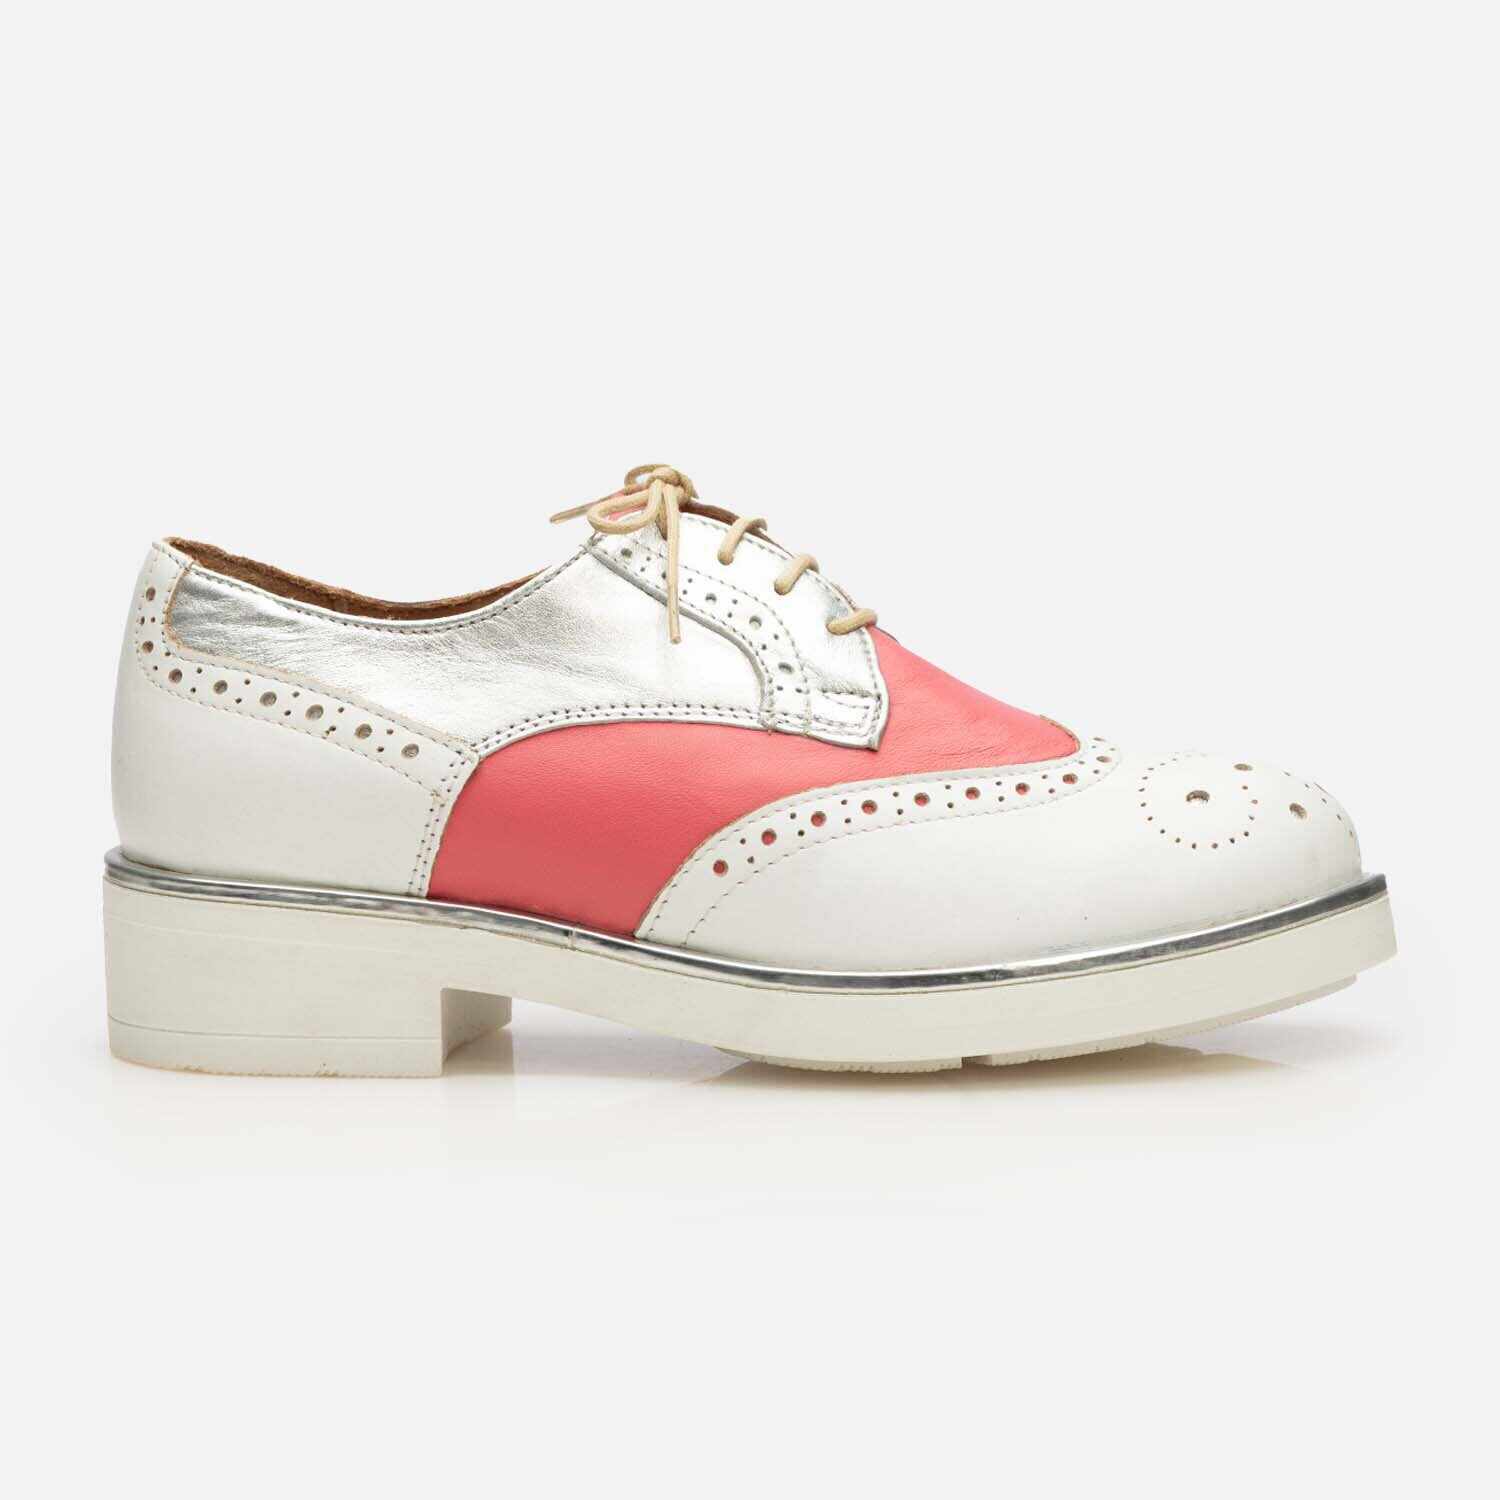 Pantofi casual dama din piele naturala,Leofex - 012-2 Alb Argintiu Roze Box